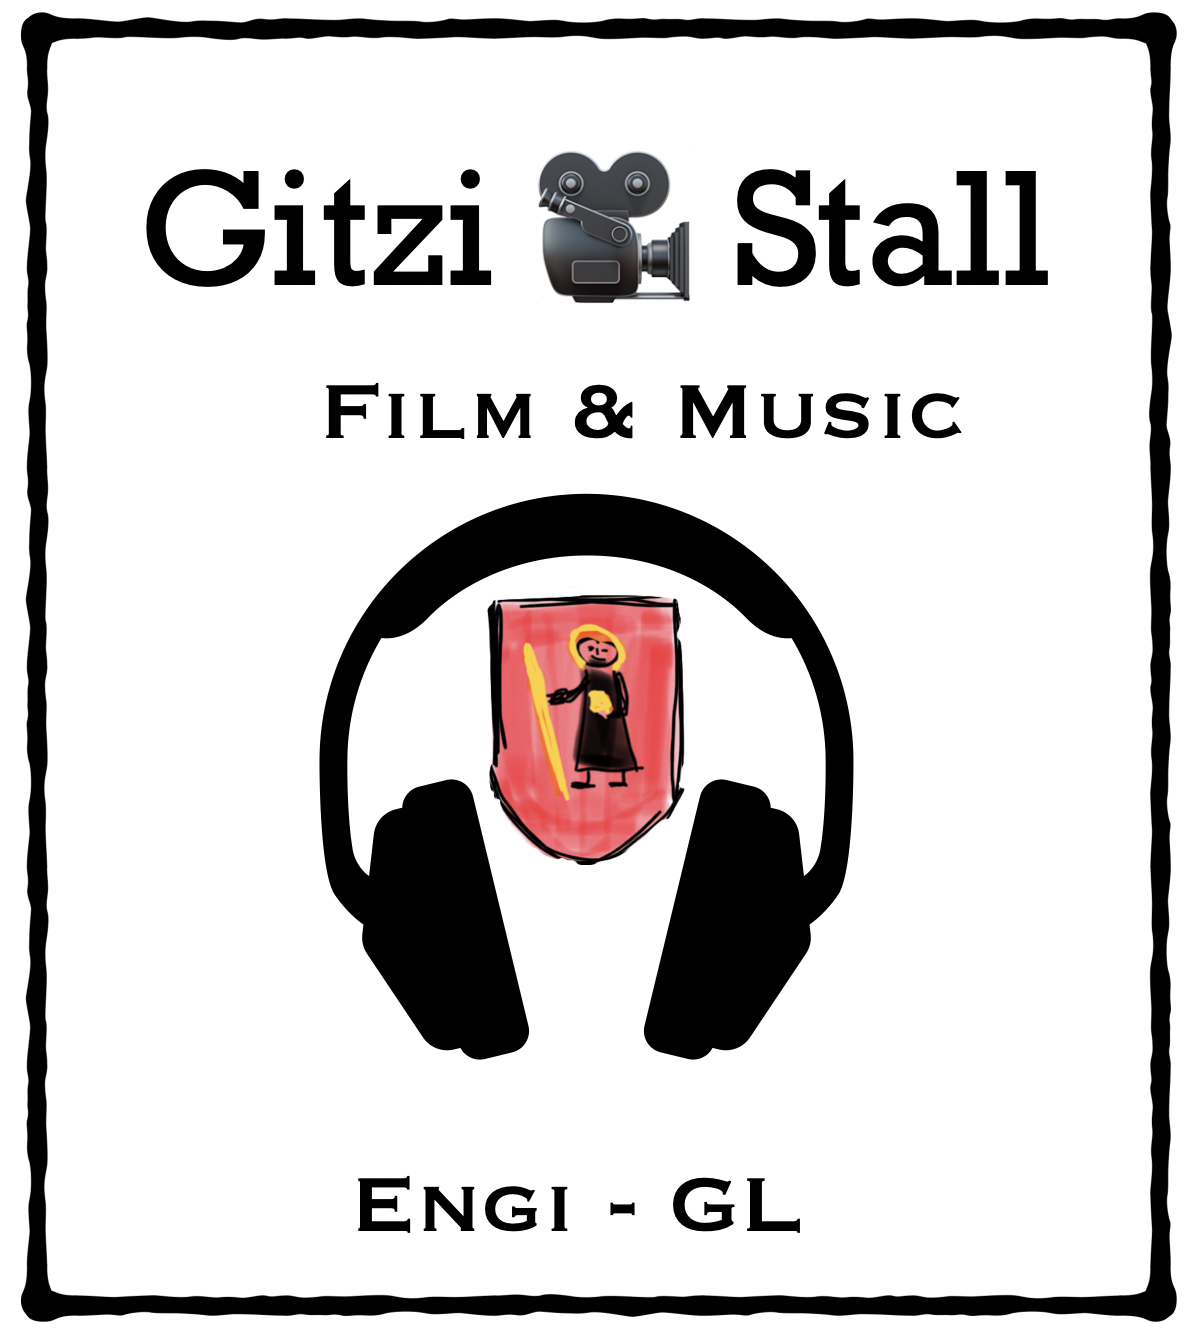 GitziStall Film & Music Recording Studio